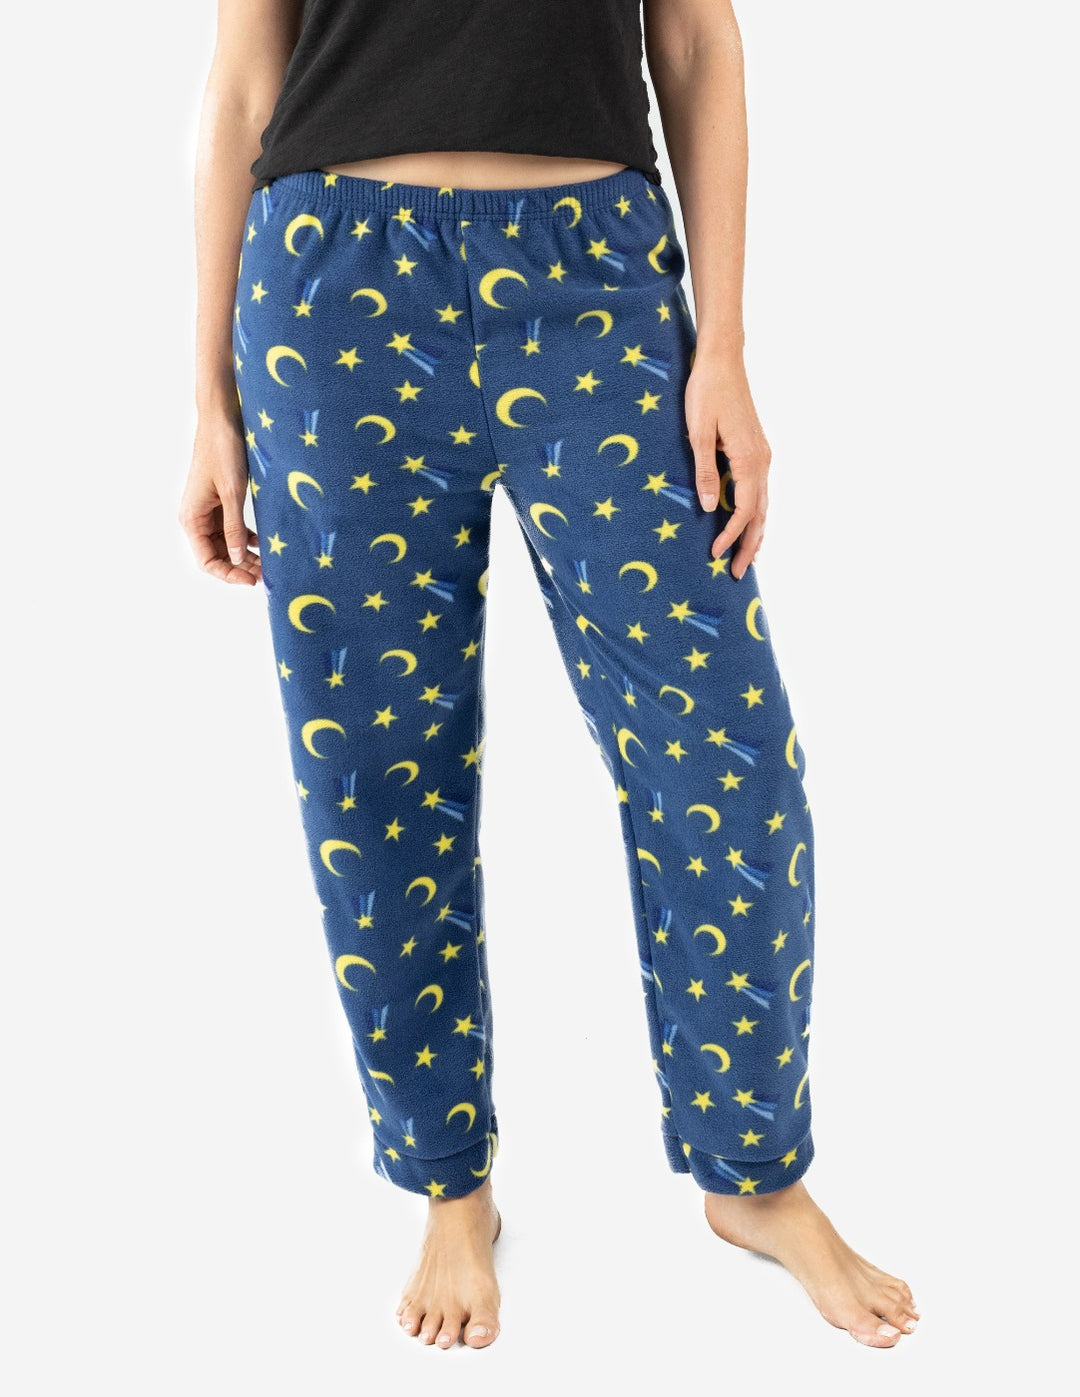 Blue Print Fluffy Fleece Pyjama Stars and Moon Pj Set